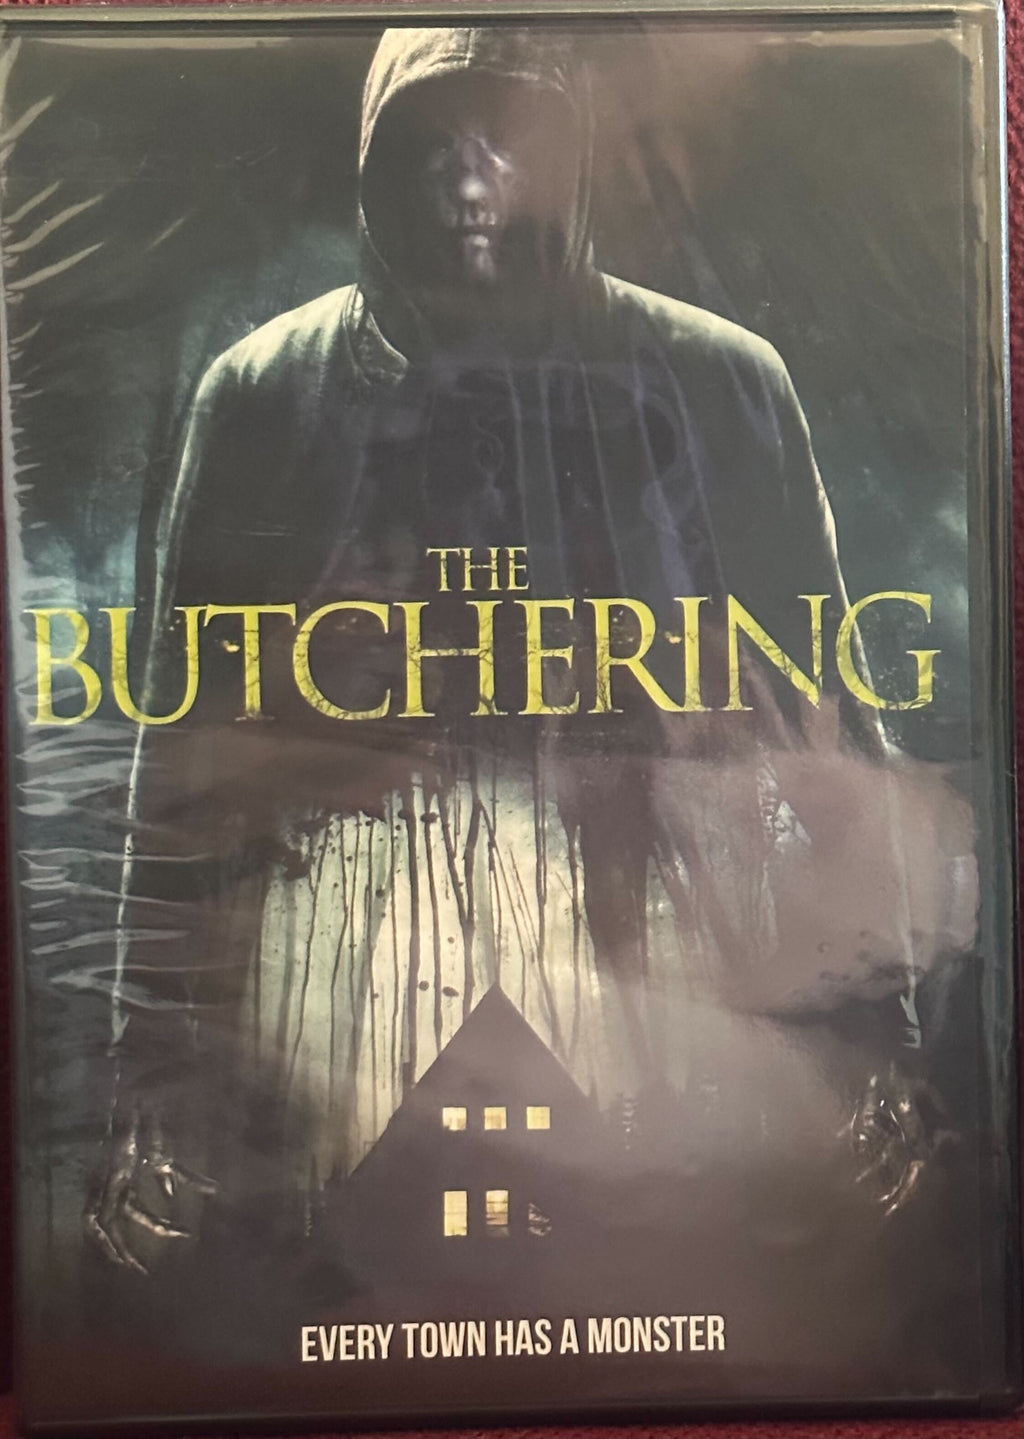 The Butchering DVD